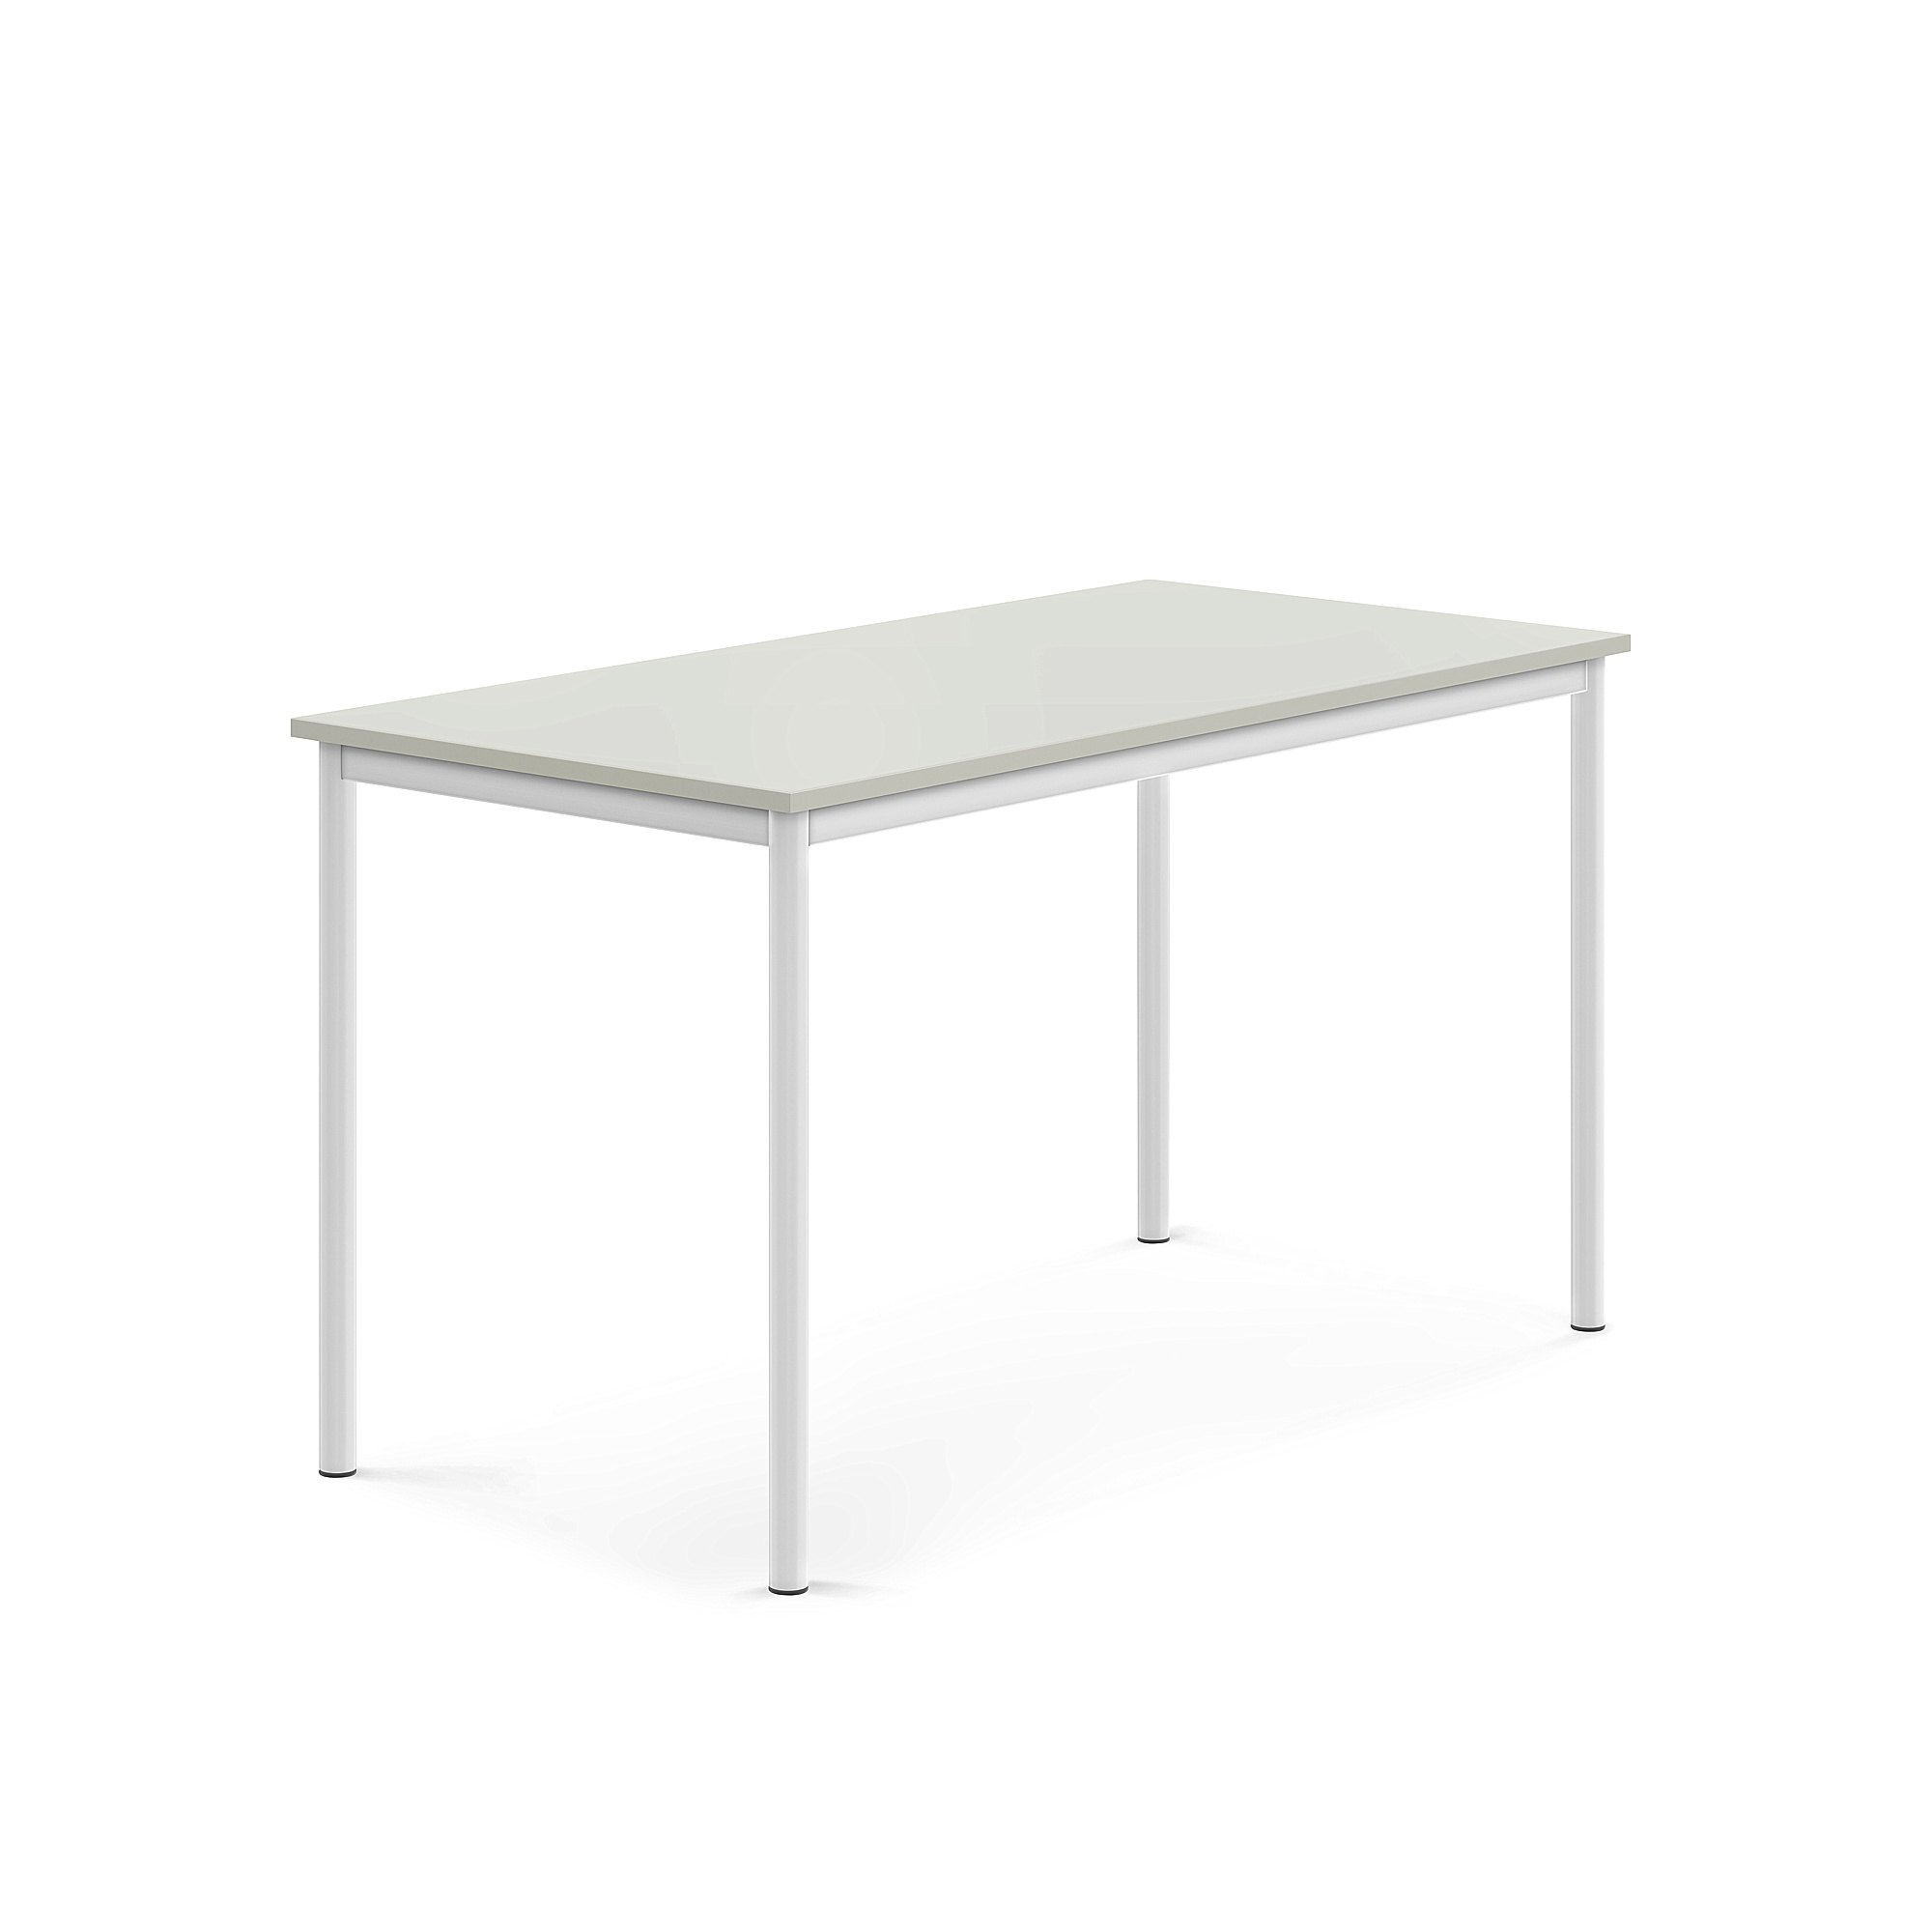 Stůl SONITUS, 1400x700x760 mm, bílé nohy, HPL deska tlumící hluk, šedá